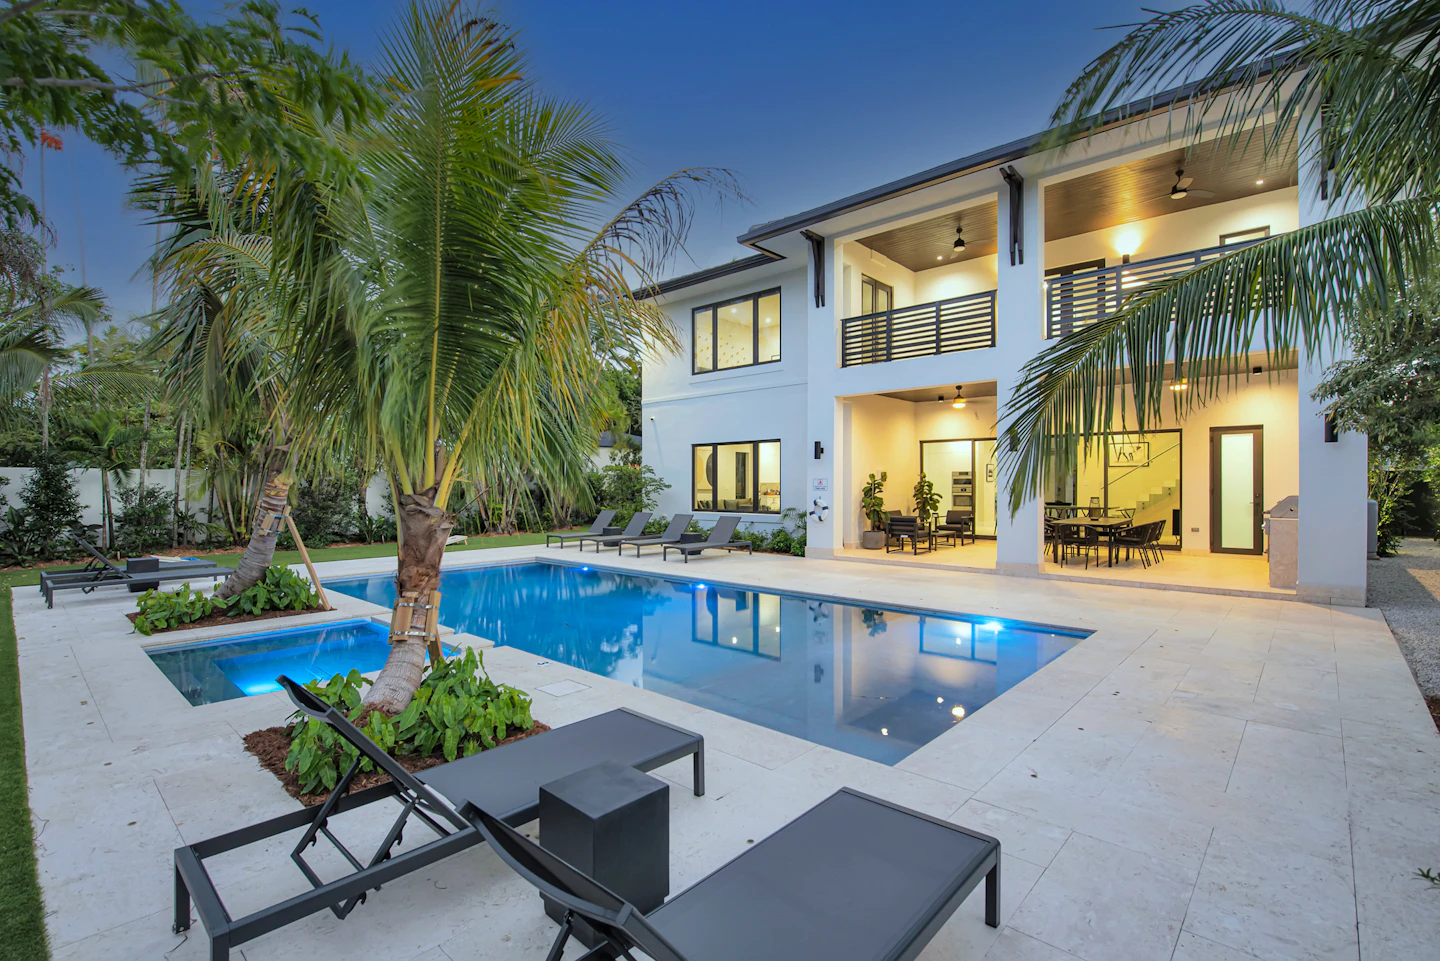 51-villa-miami-backyard-pool